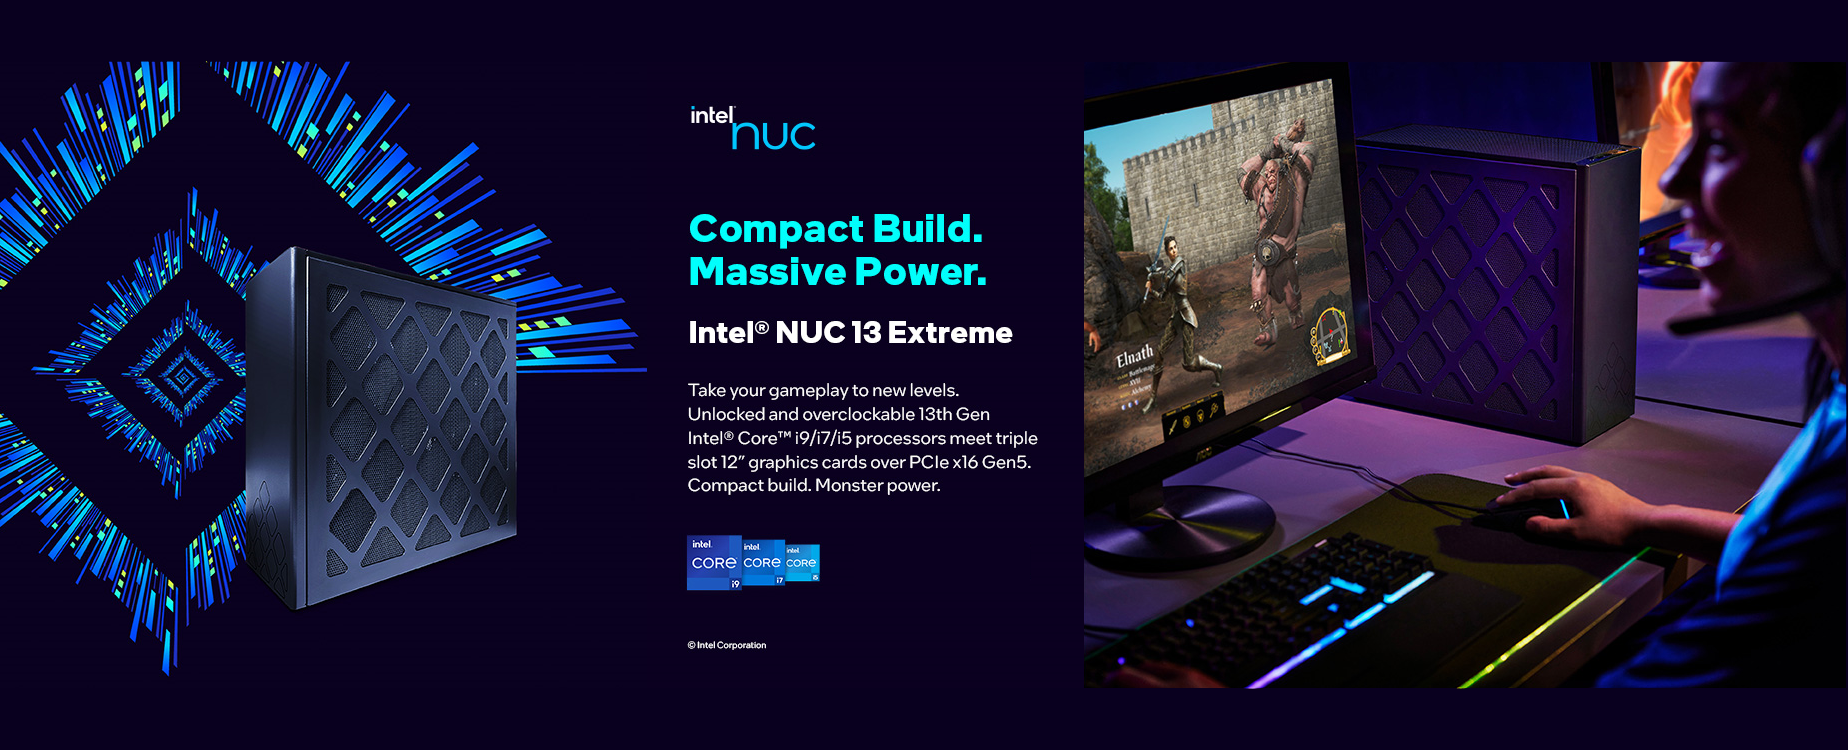 Intel NUC 13 Extreme Gaming Rig